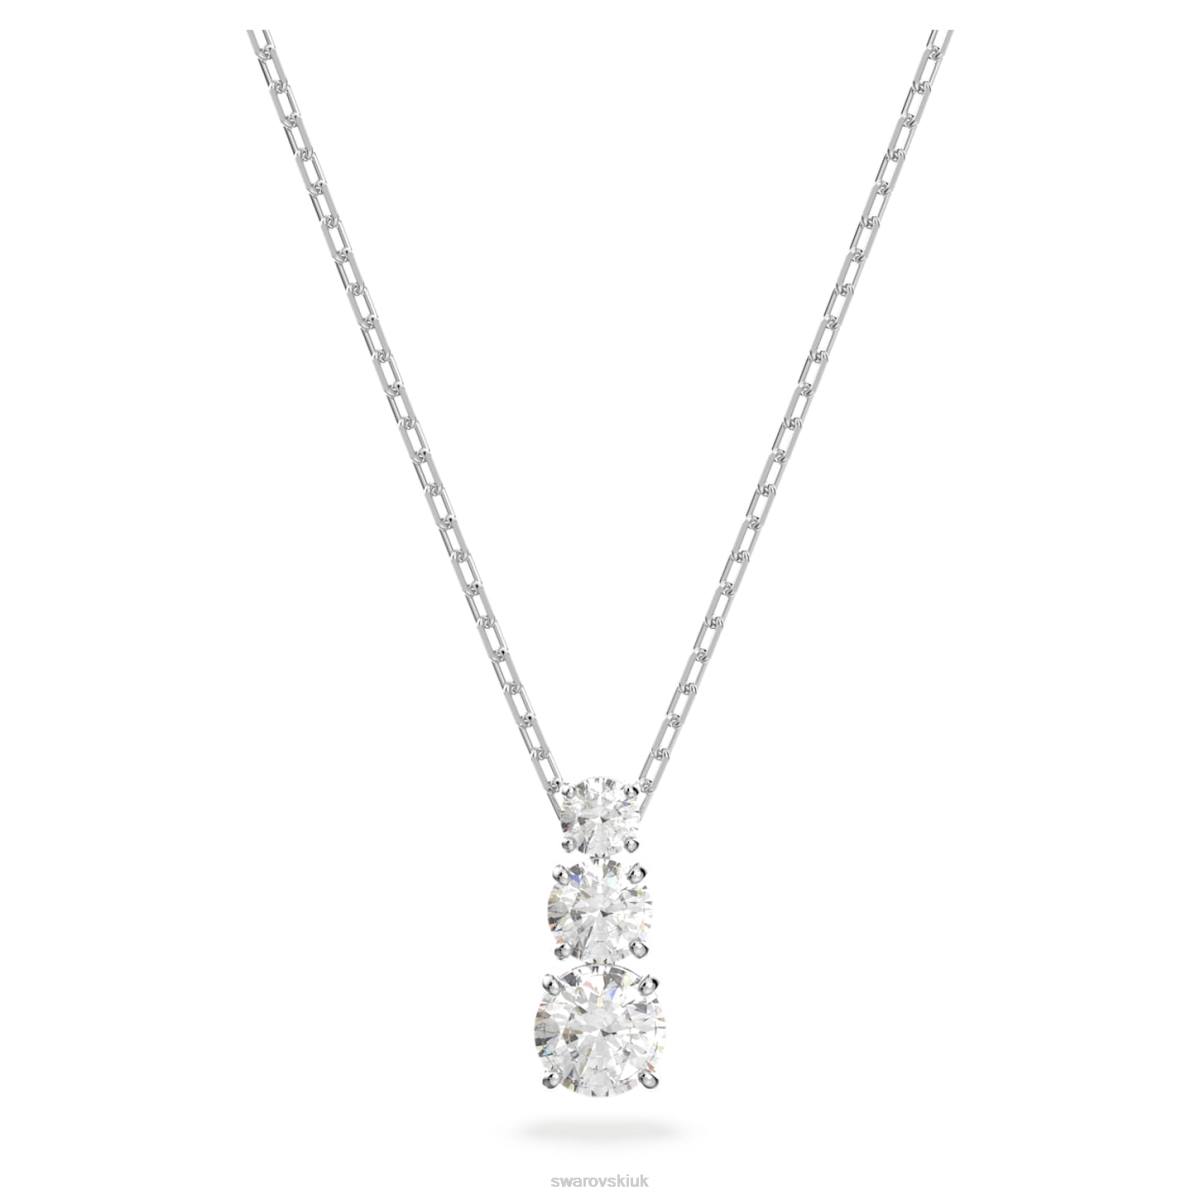 Jewelry Swarovski Attract Trilogy pendant Round cut, White, Rhodium plated 48JX173